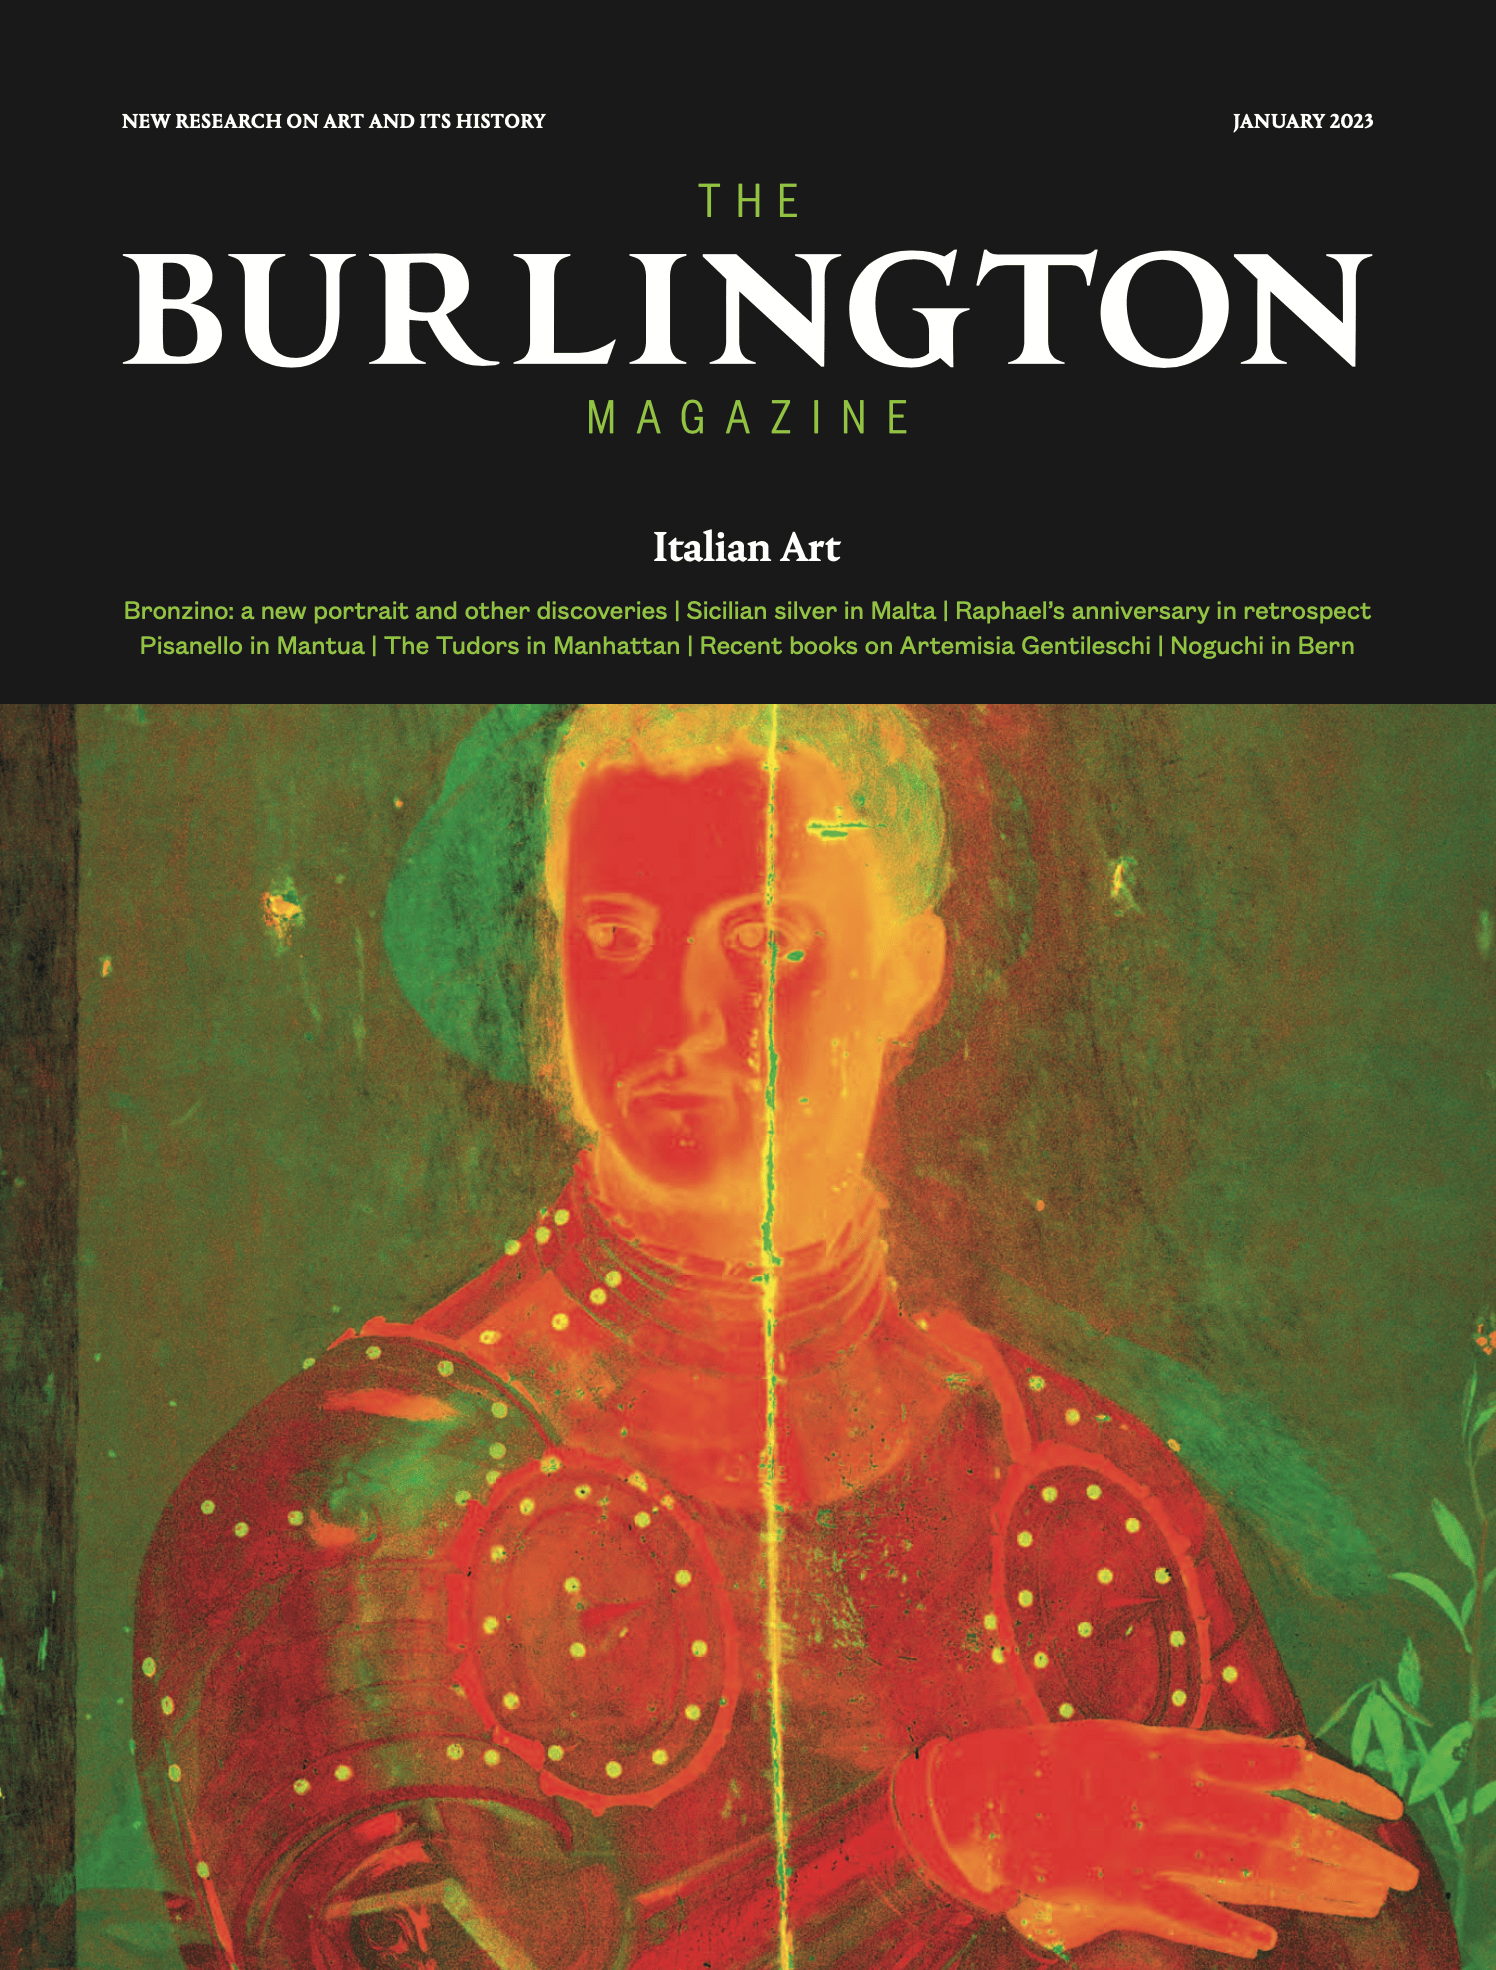 The Burlington Magazine January 2023: Italian Art